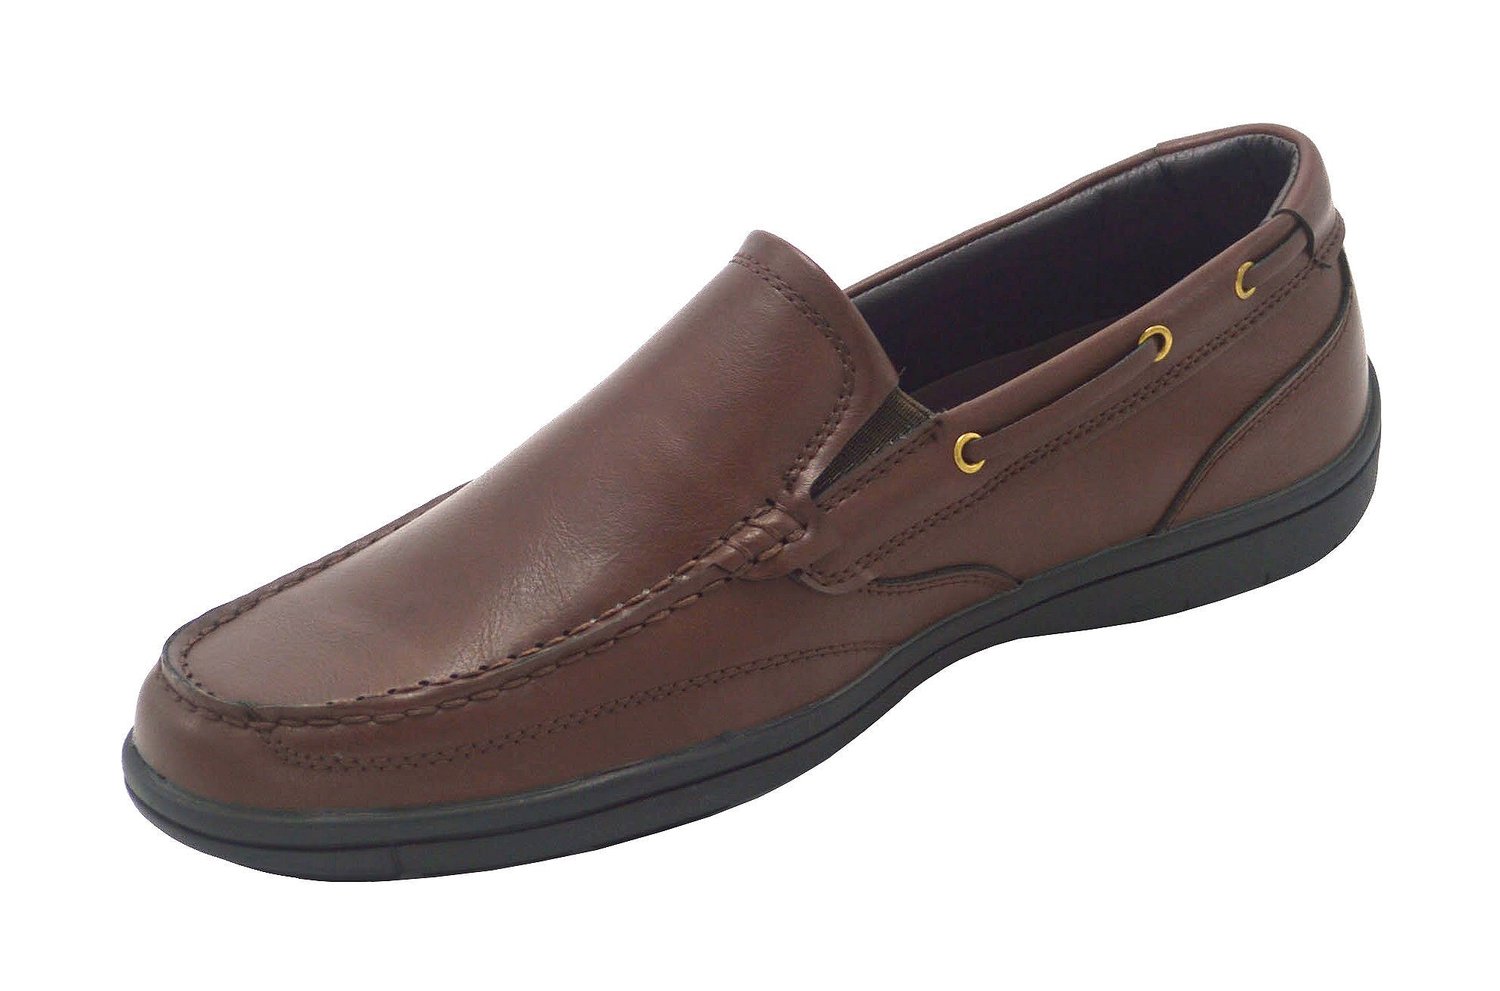 Wholesale Men's Shoes For Men Dress Loafer Barrett NGM5